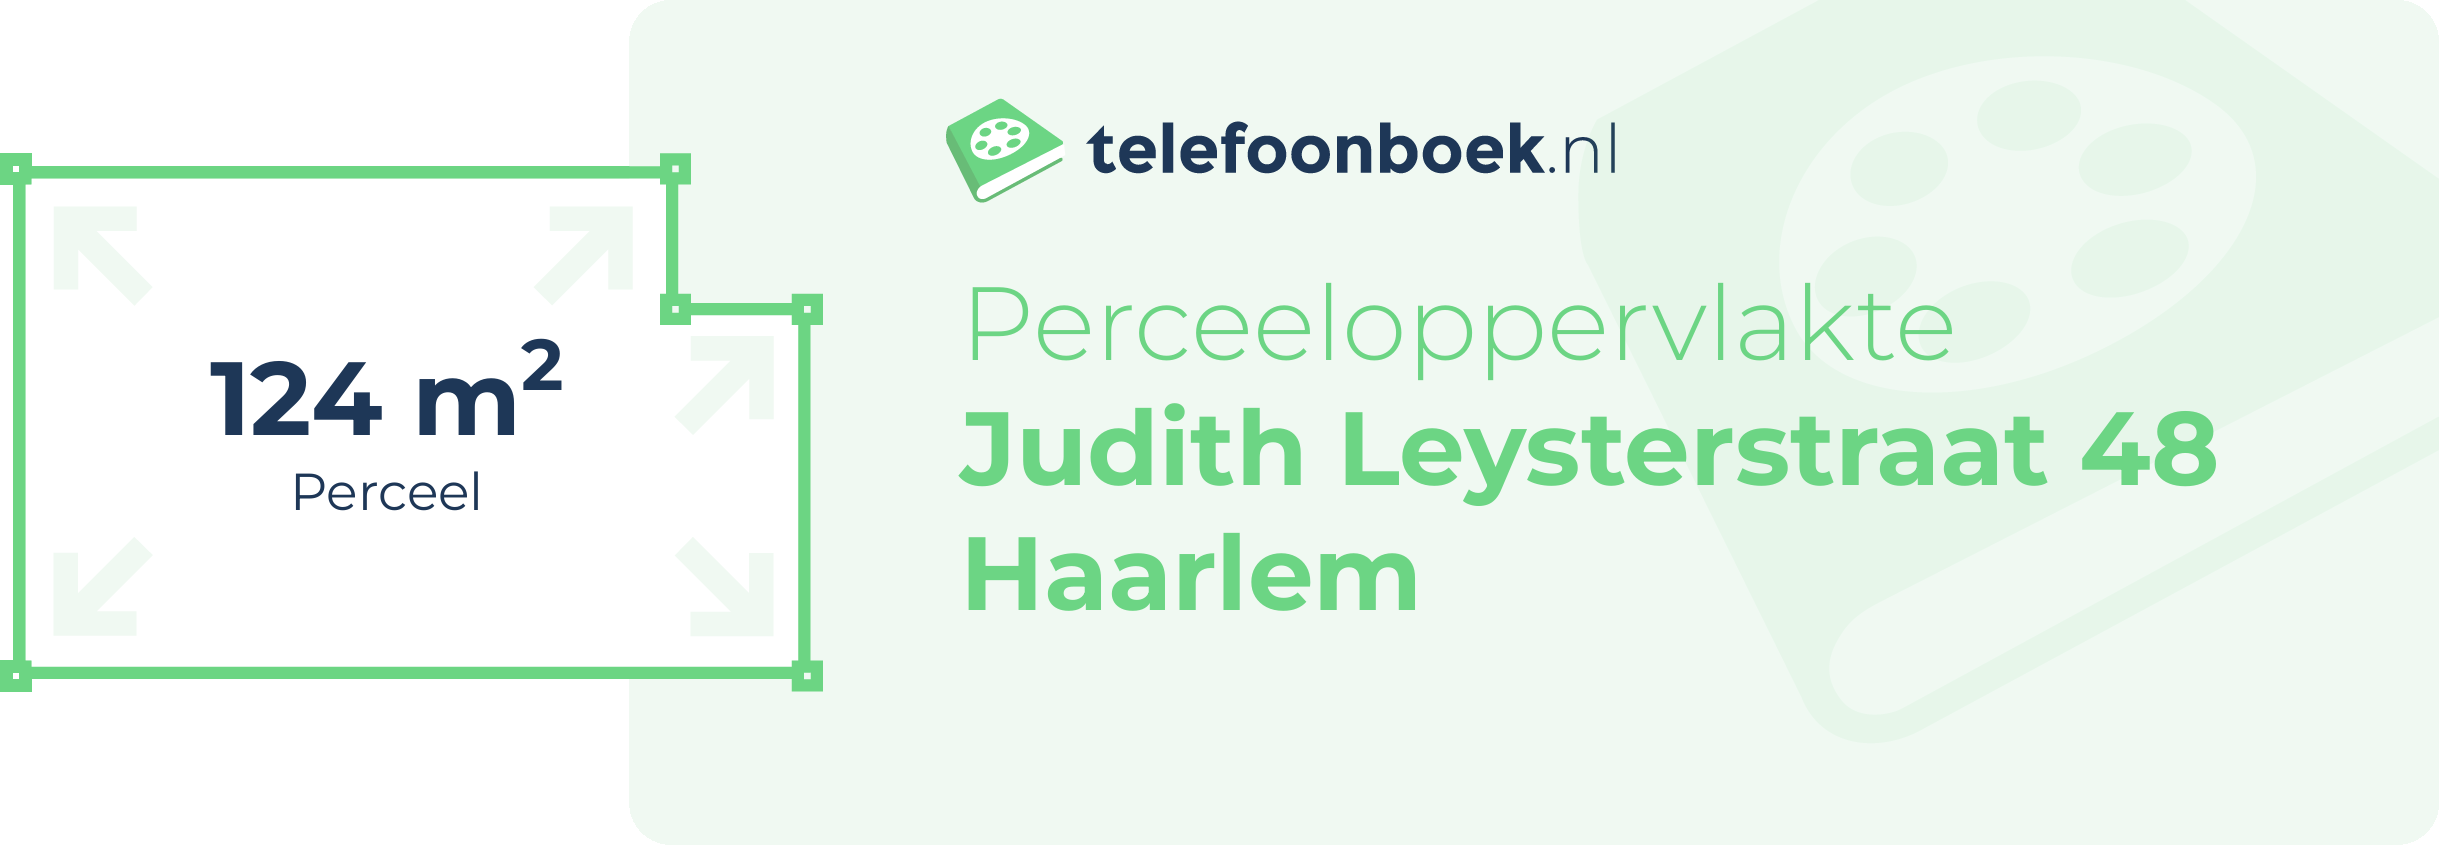 Perceeloppervlakte Judith Leysterstraat 48 Haarlem